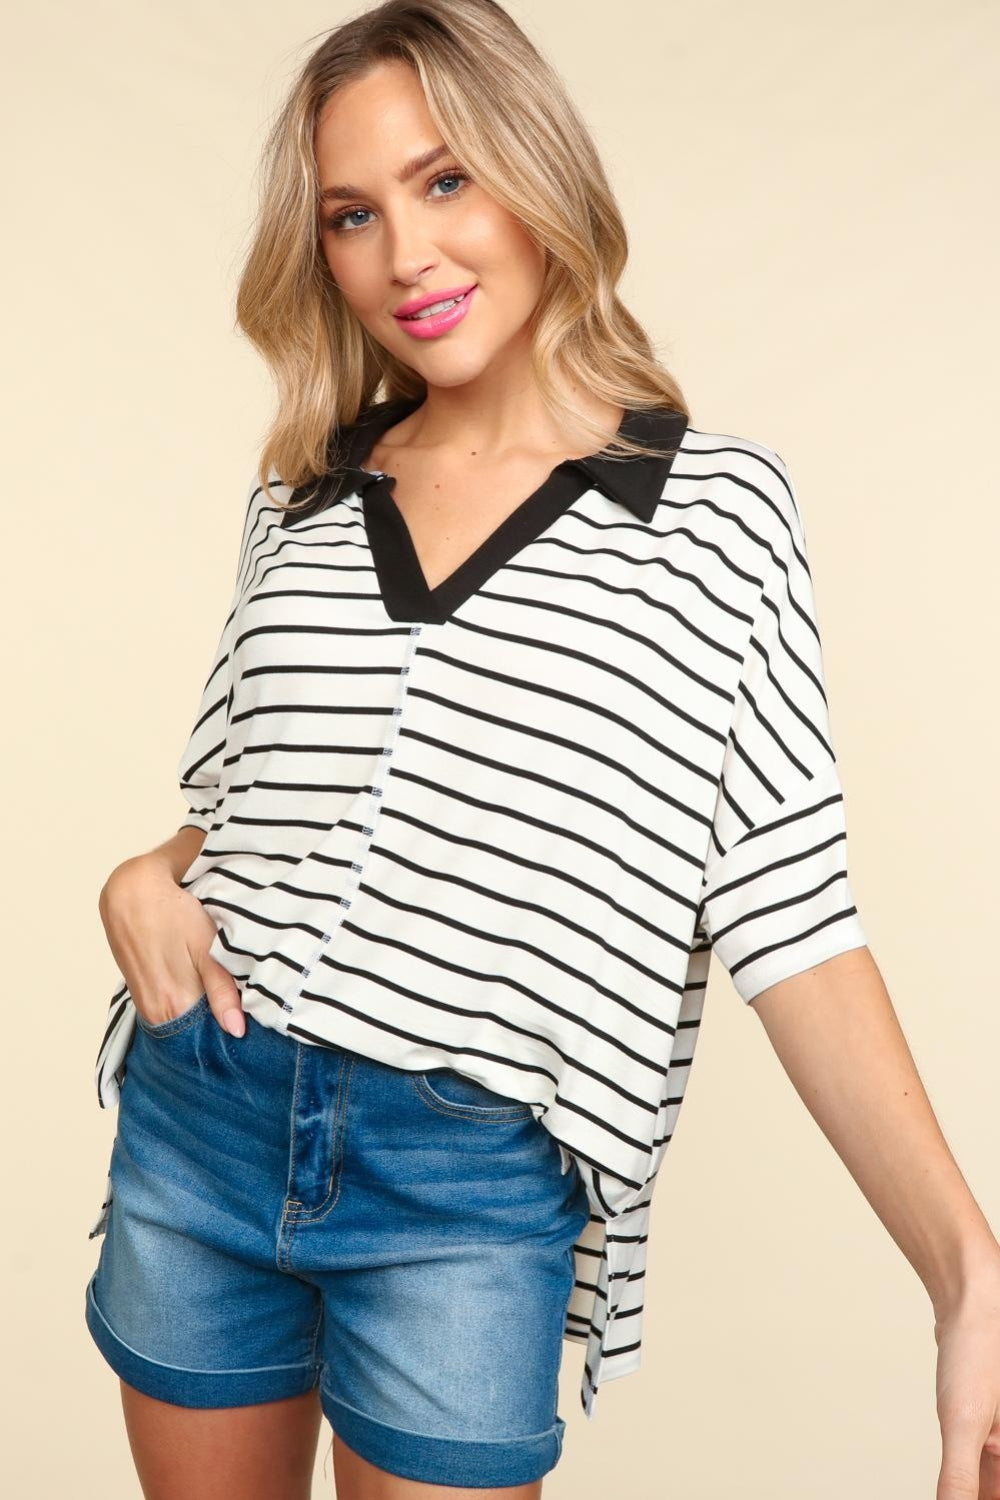 TEEK - Off White/Black Horizontal Striped Half Sleeve T-Shirt TOPS TEEK Trend   